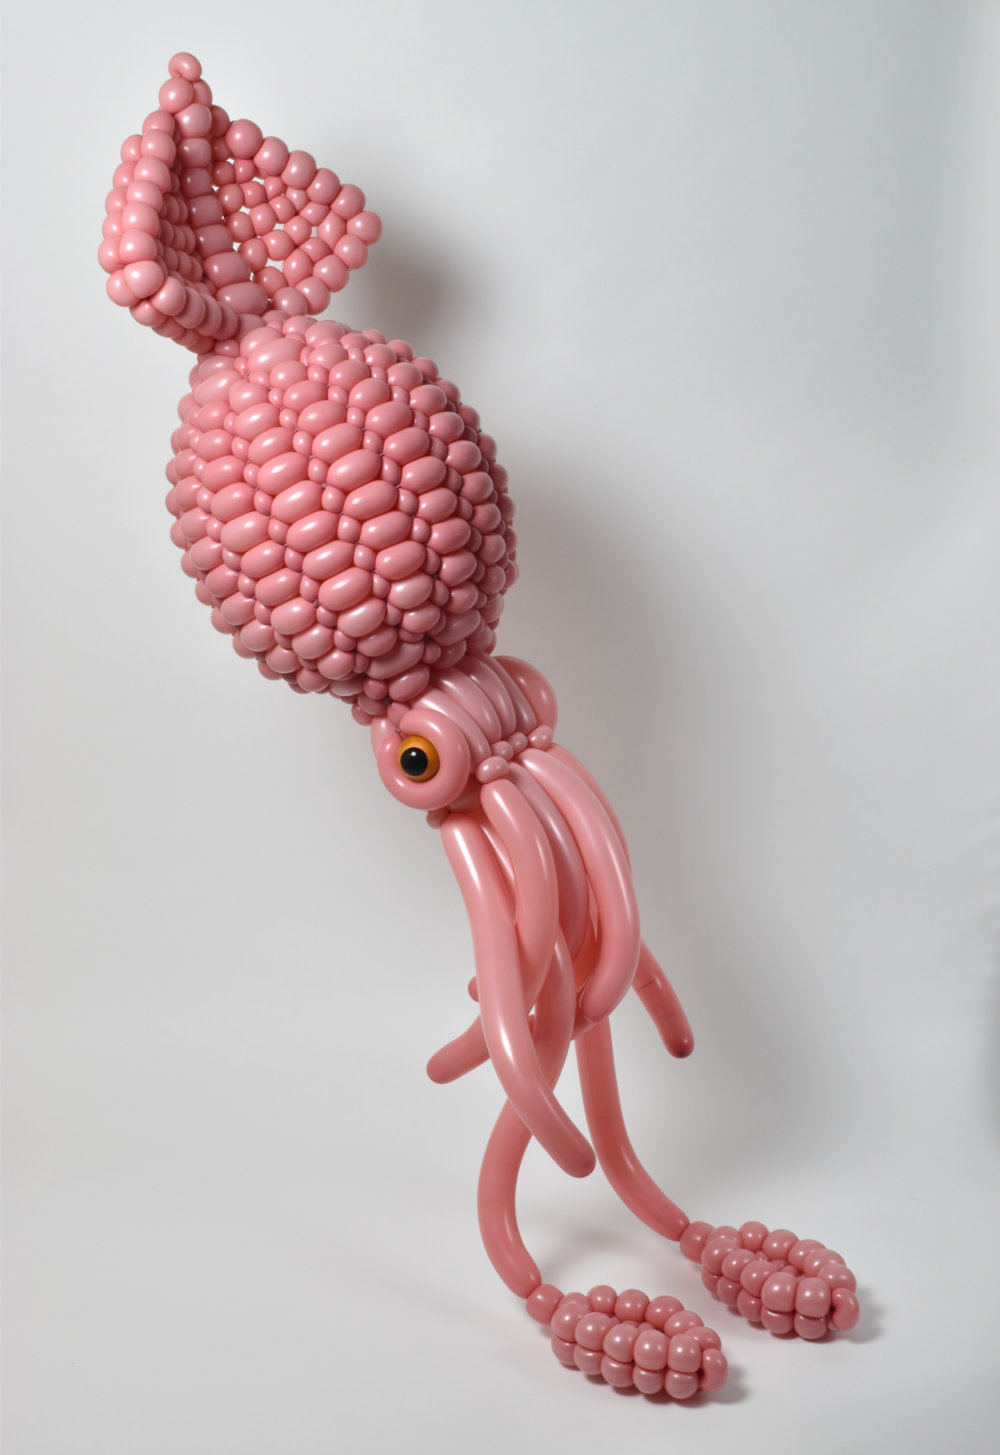 New Animal Balloon Sculptures By Masayoshi Matsumoto 1